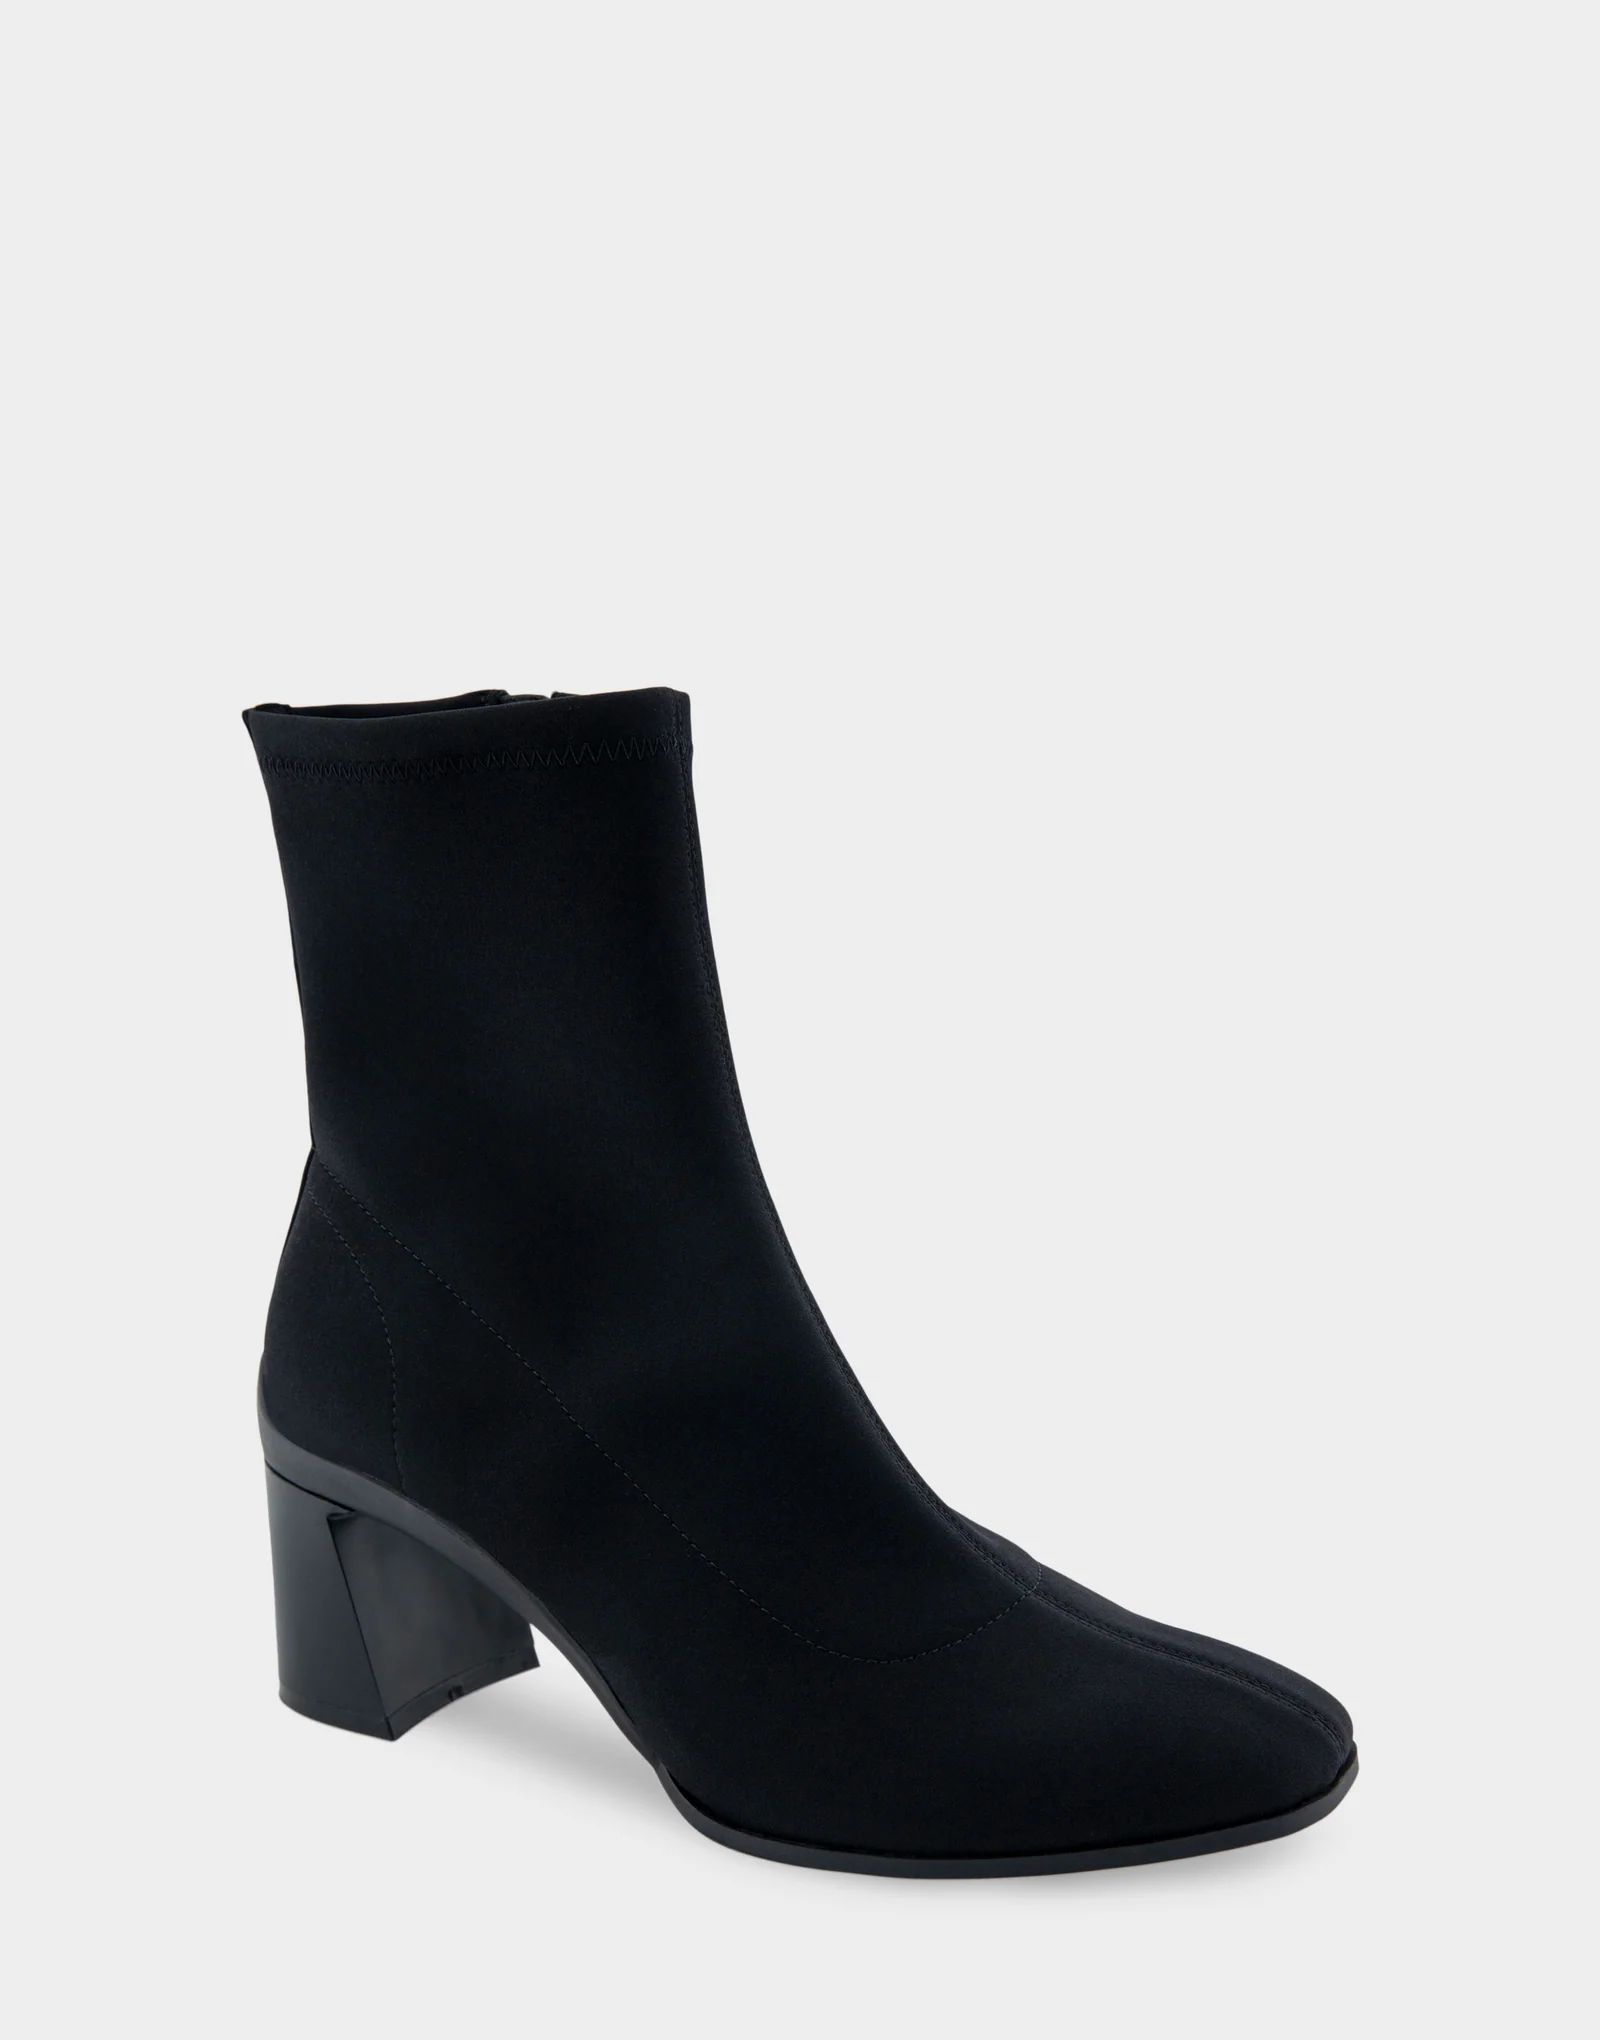 Women's Heeled Ankle Boot in Black | Aerosoles